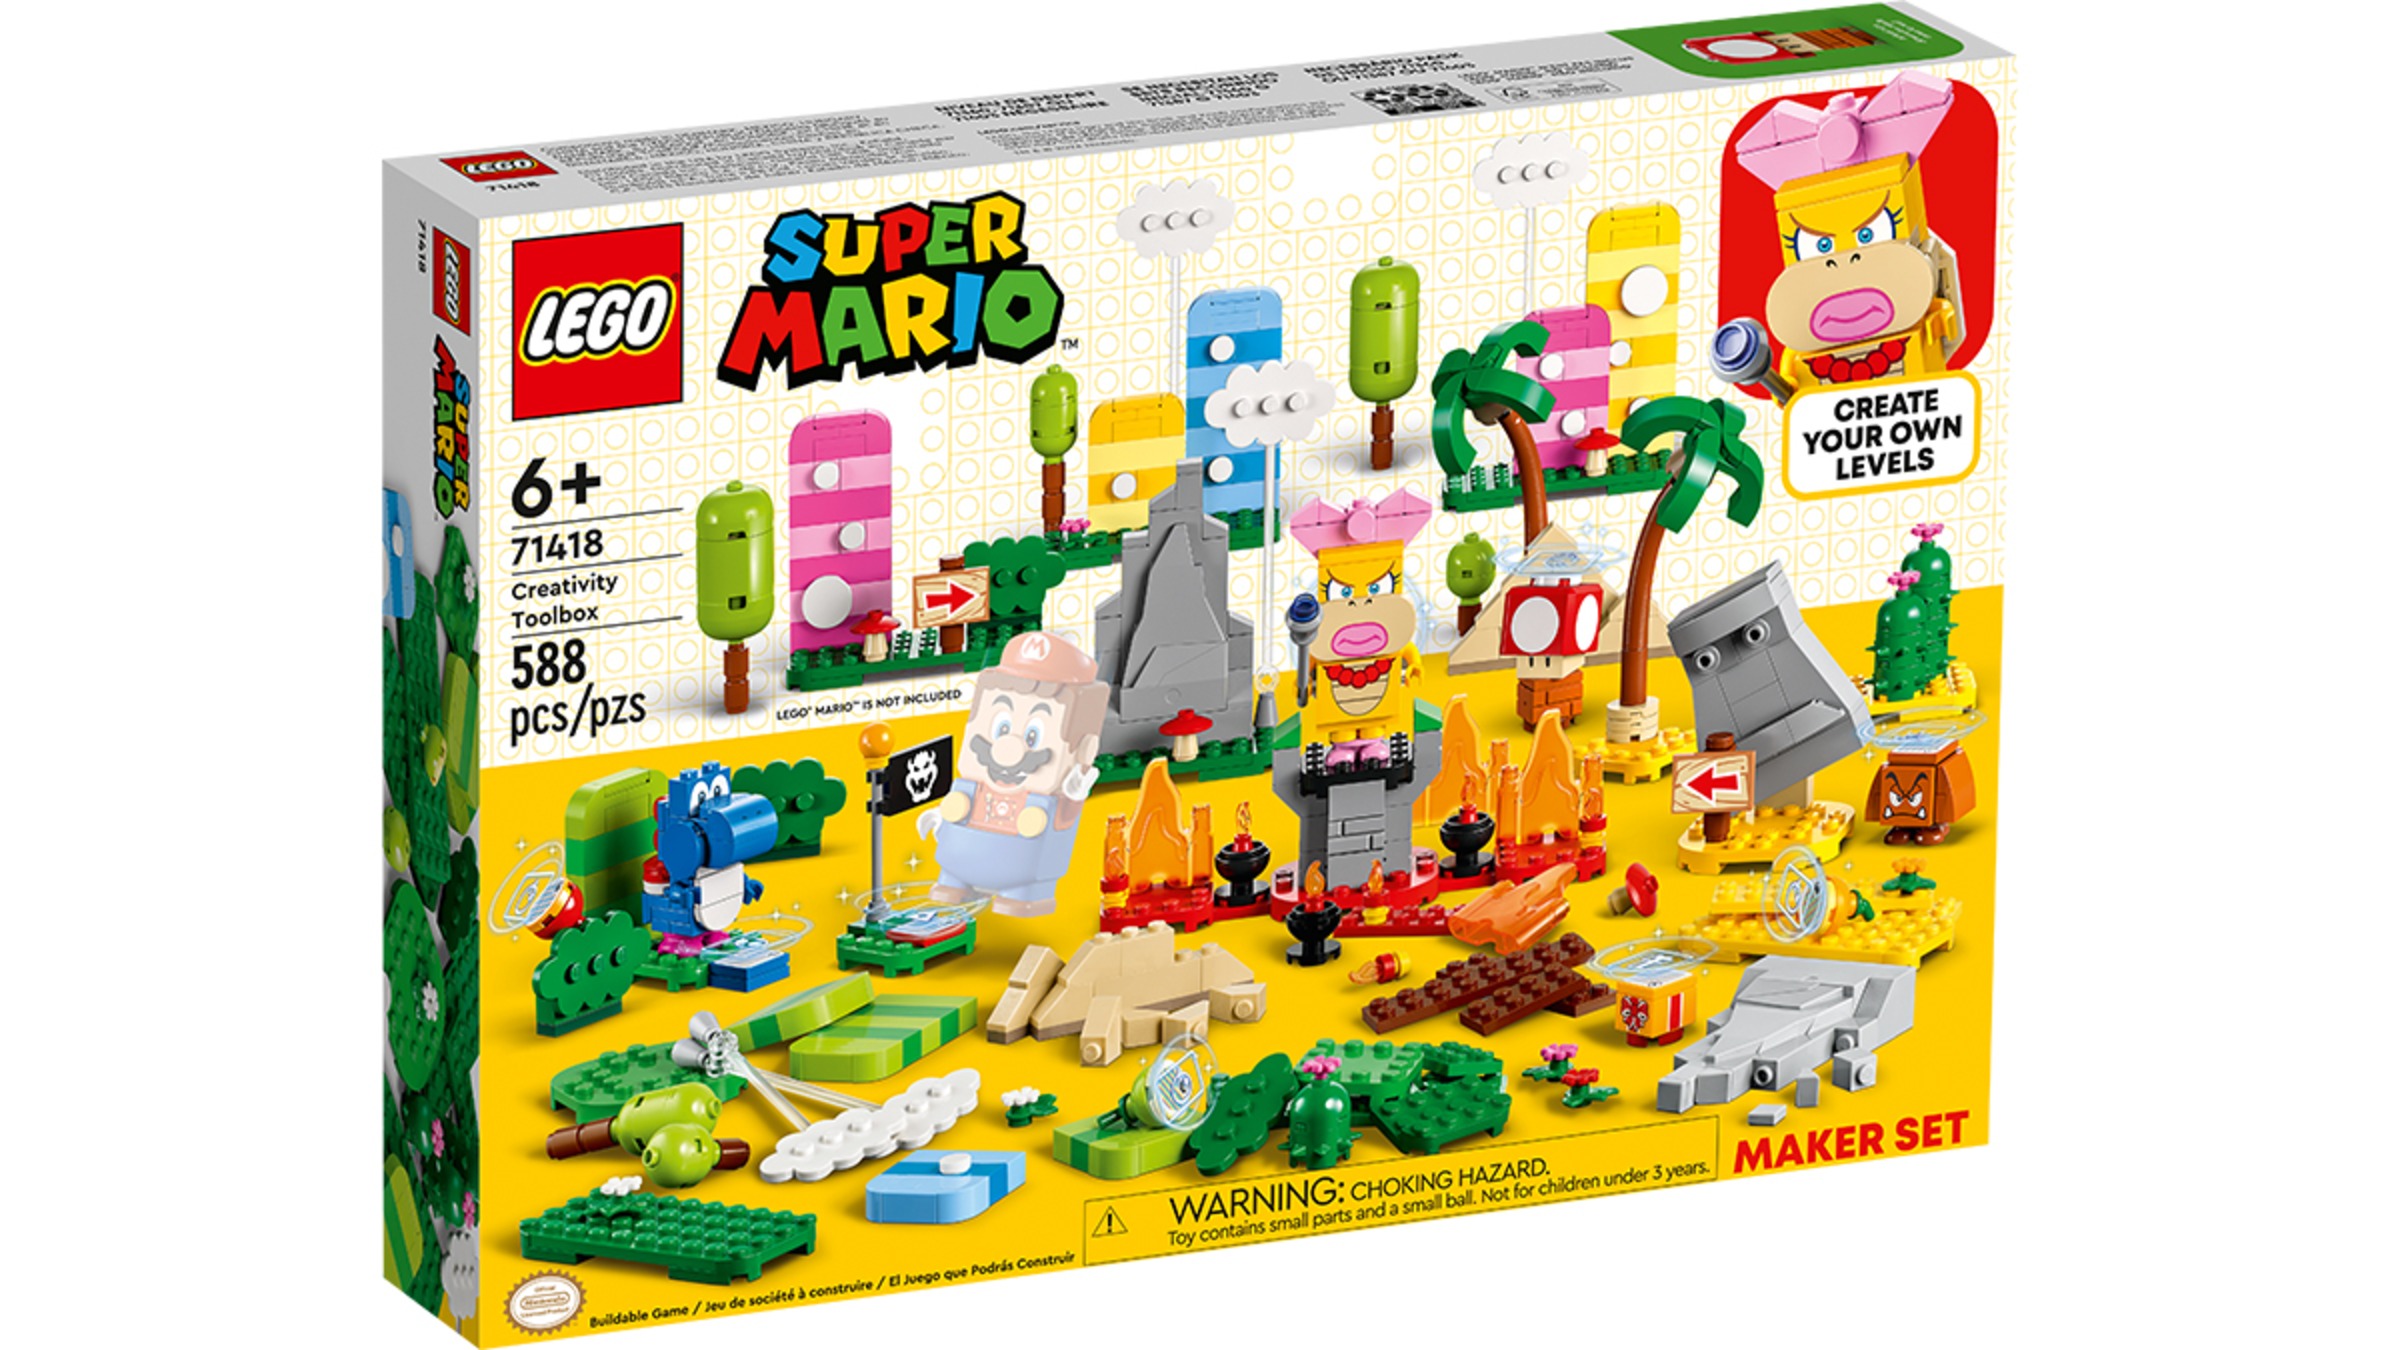 LEGO® Super Mario™ Creativity Toolbox Maker Set - Nintendo